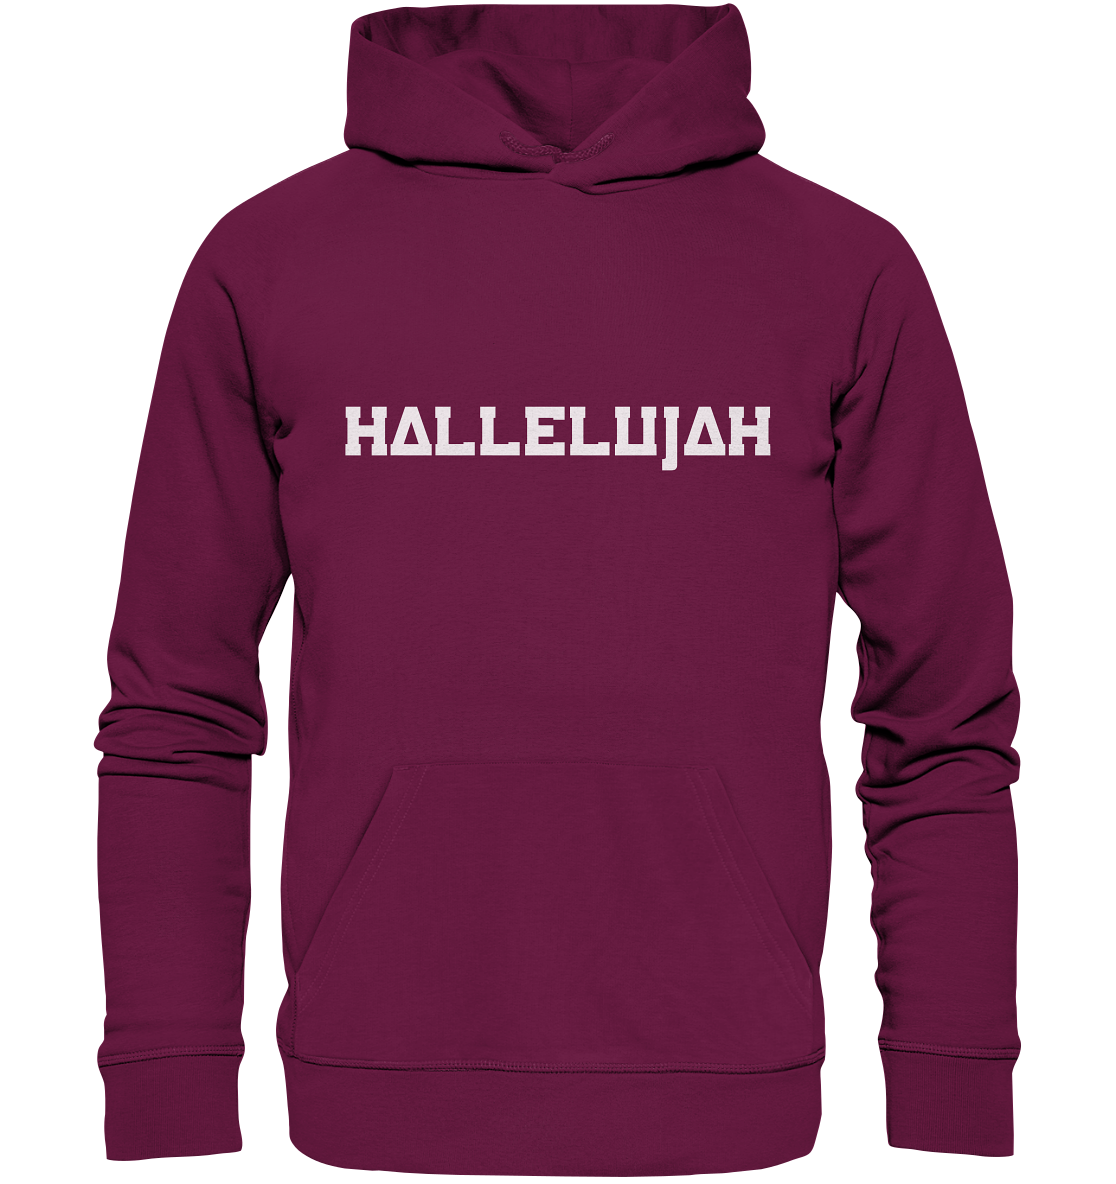 Hallelujah - Premium Unisex Hoodie